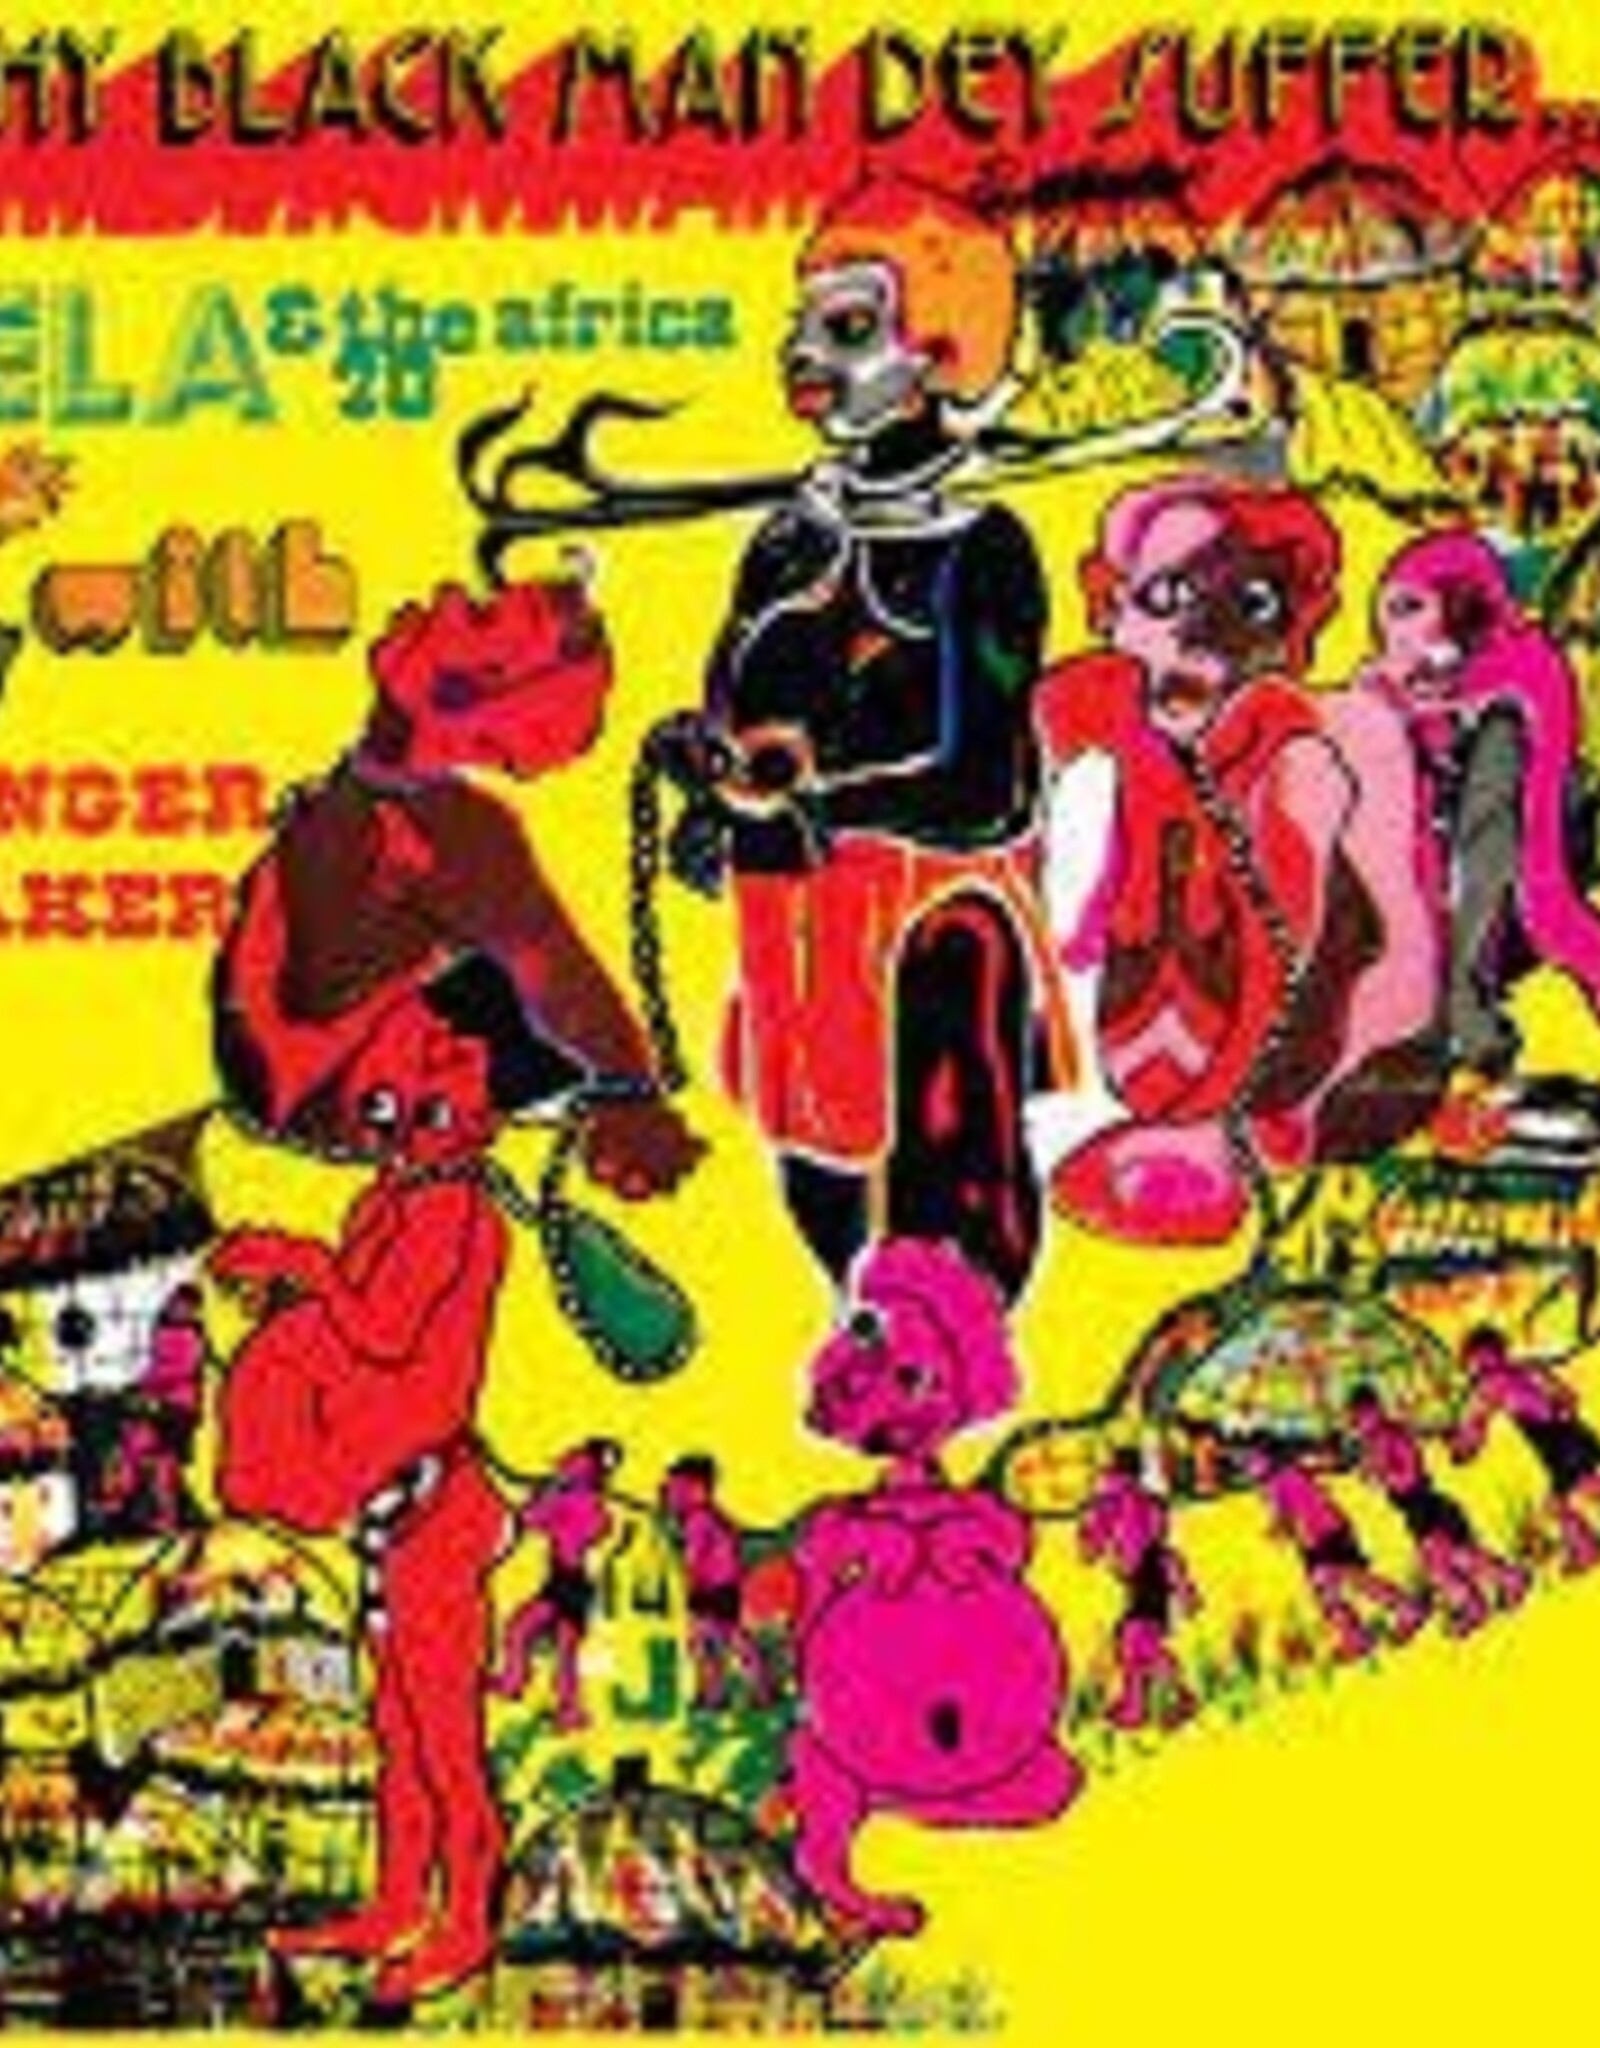 Fela Kuti - Why Black Men Dey Suffer